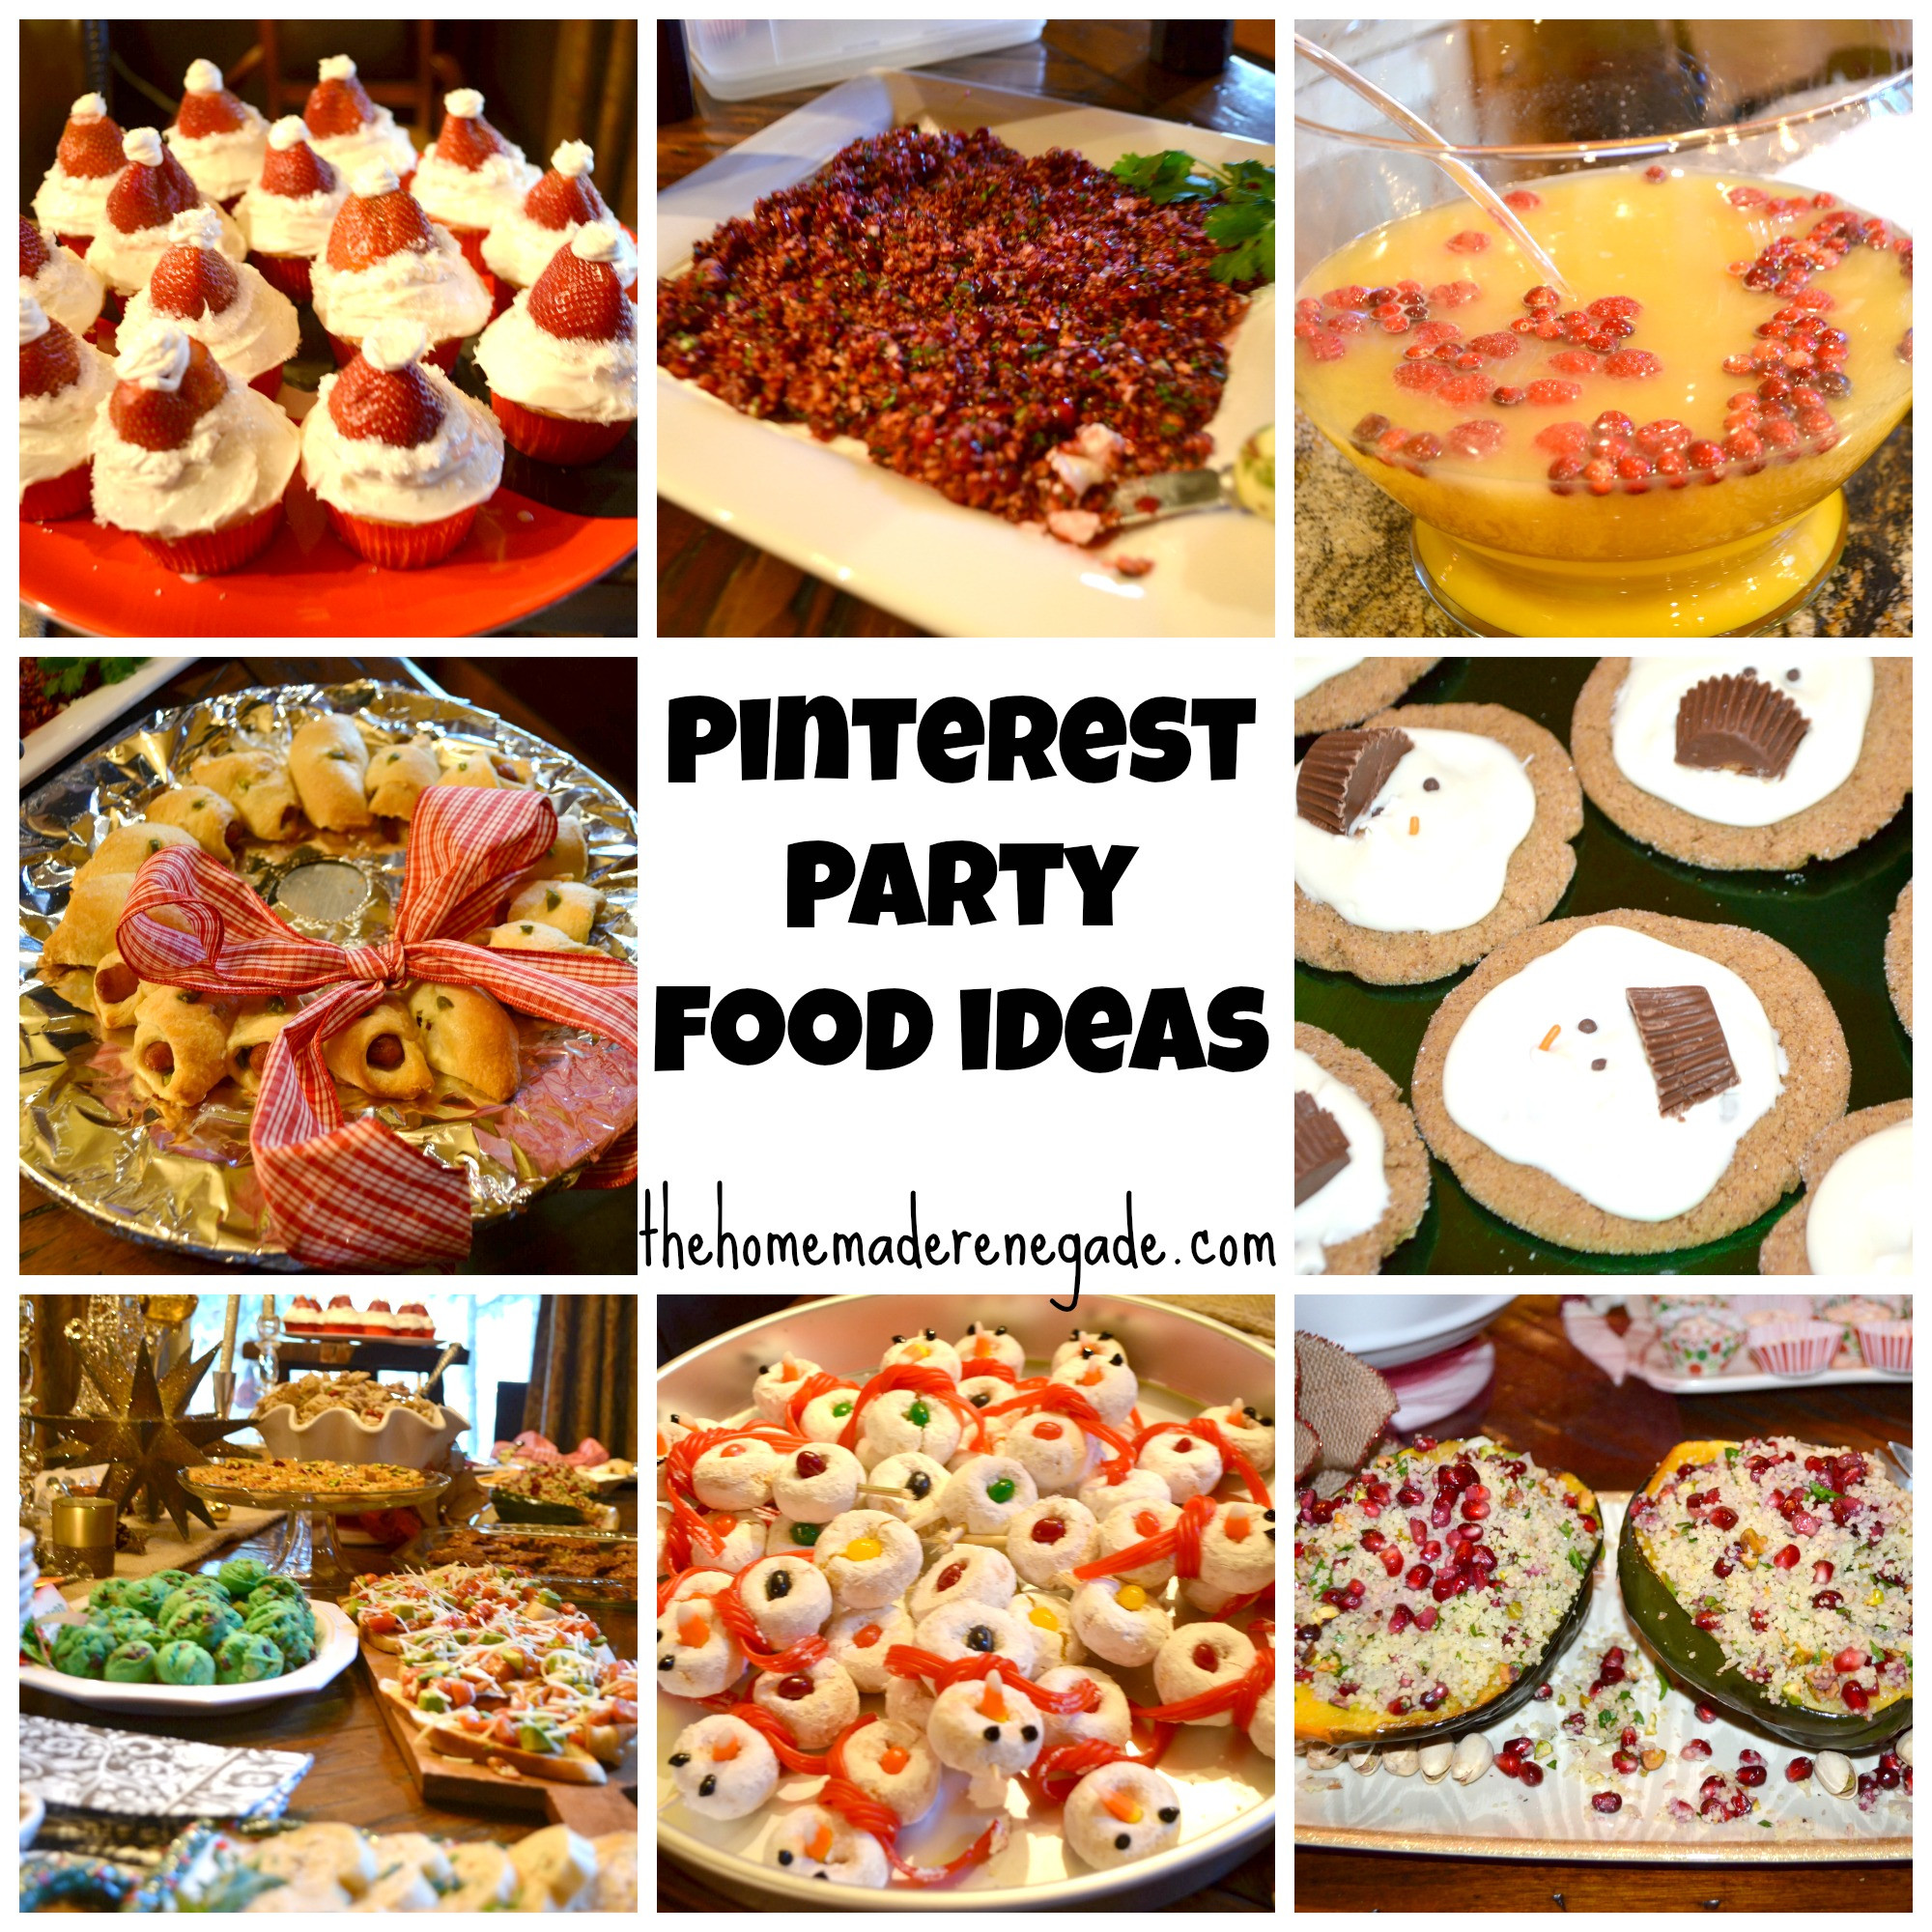 Party Food Ideas Pinterest
 How To Host a Pinterest Party Krista Gilbert